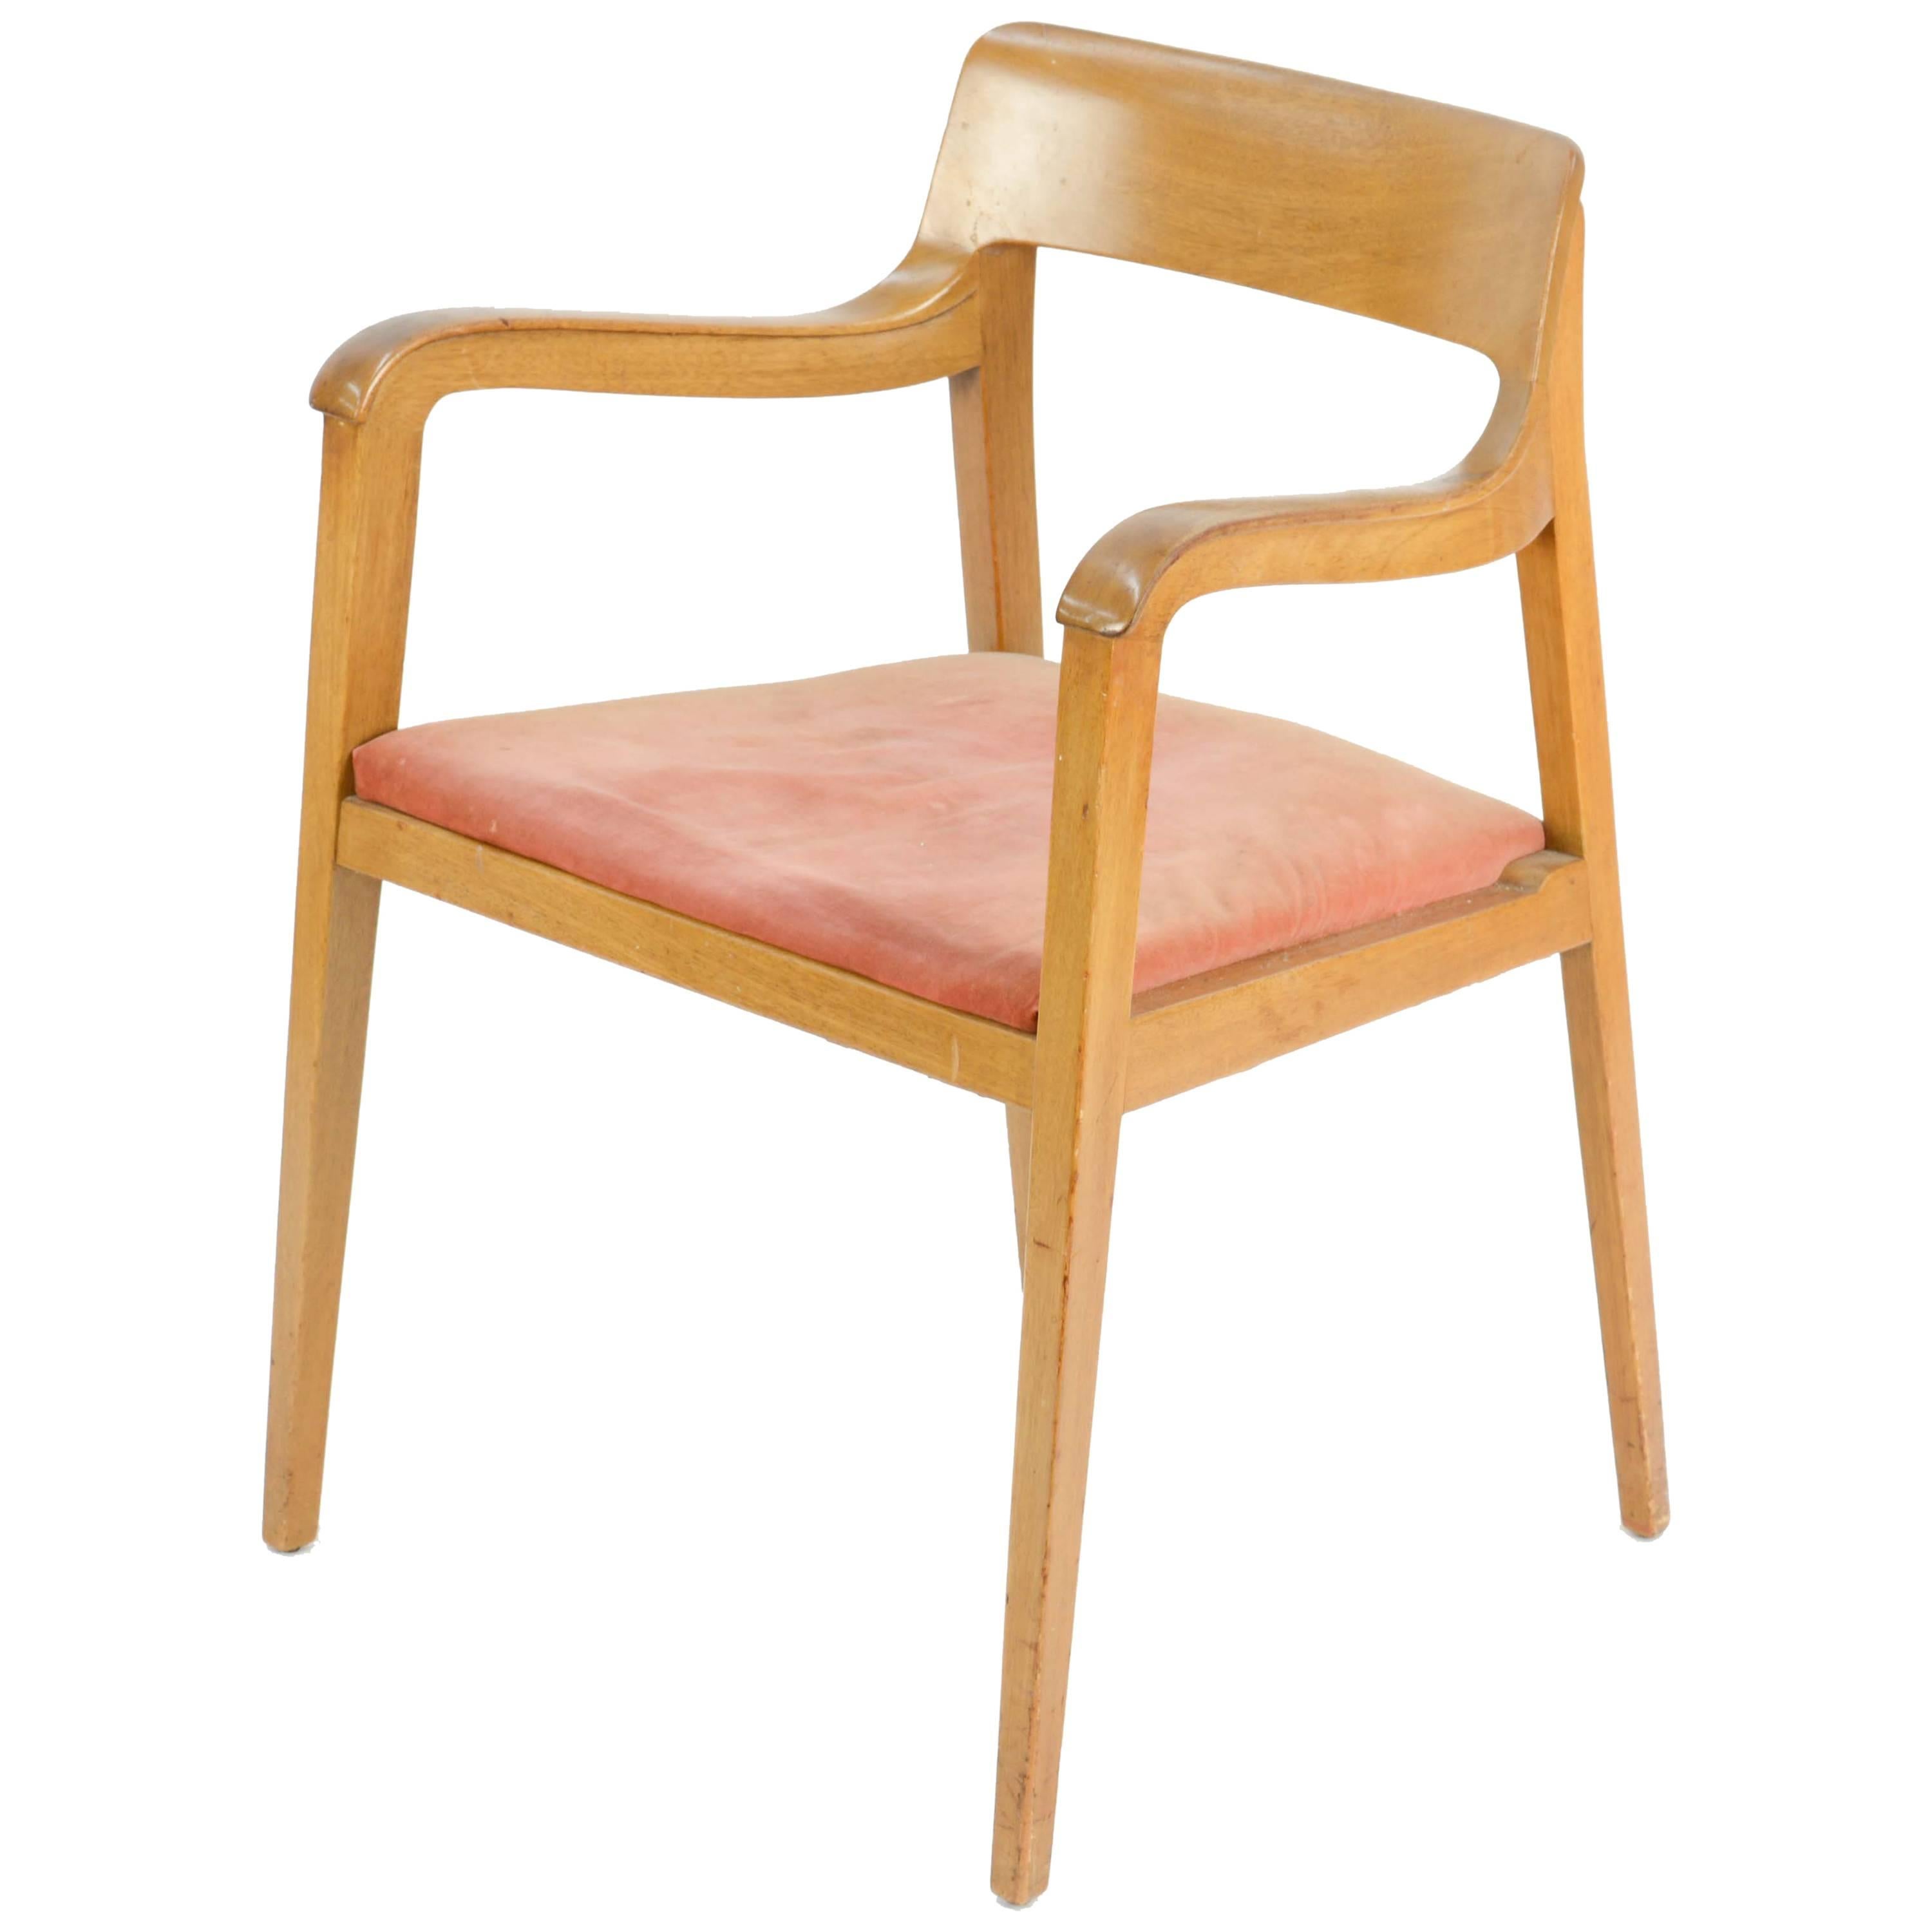 Elegant Edward Wormley for Dunbar Riemerschmid Chairs Model 4797